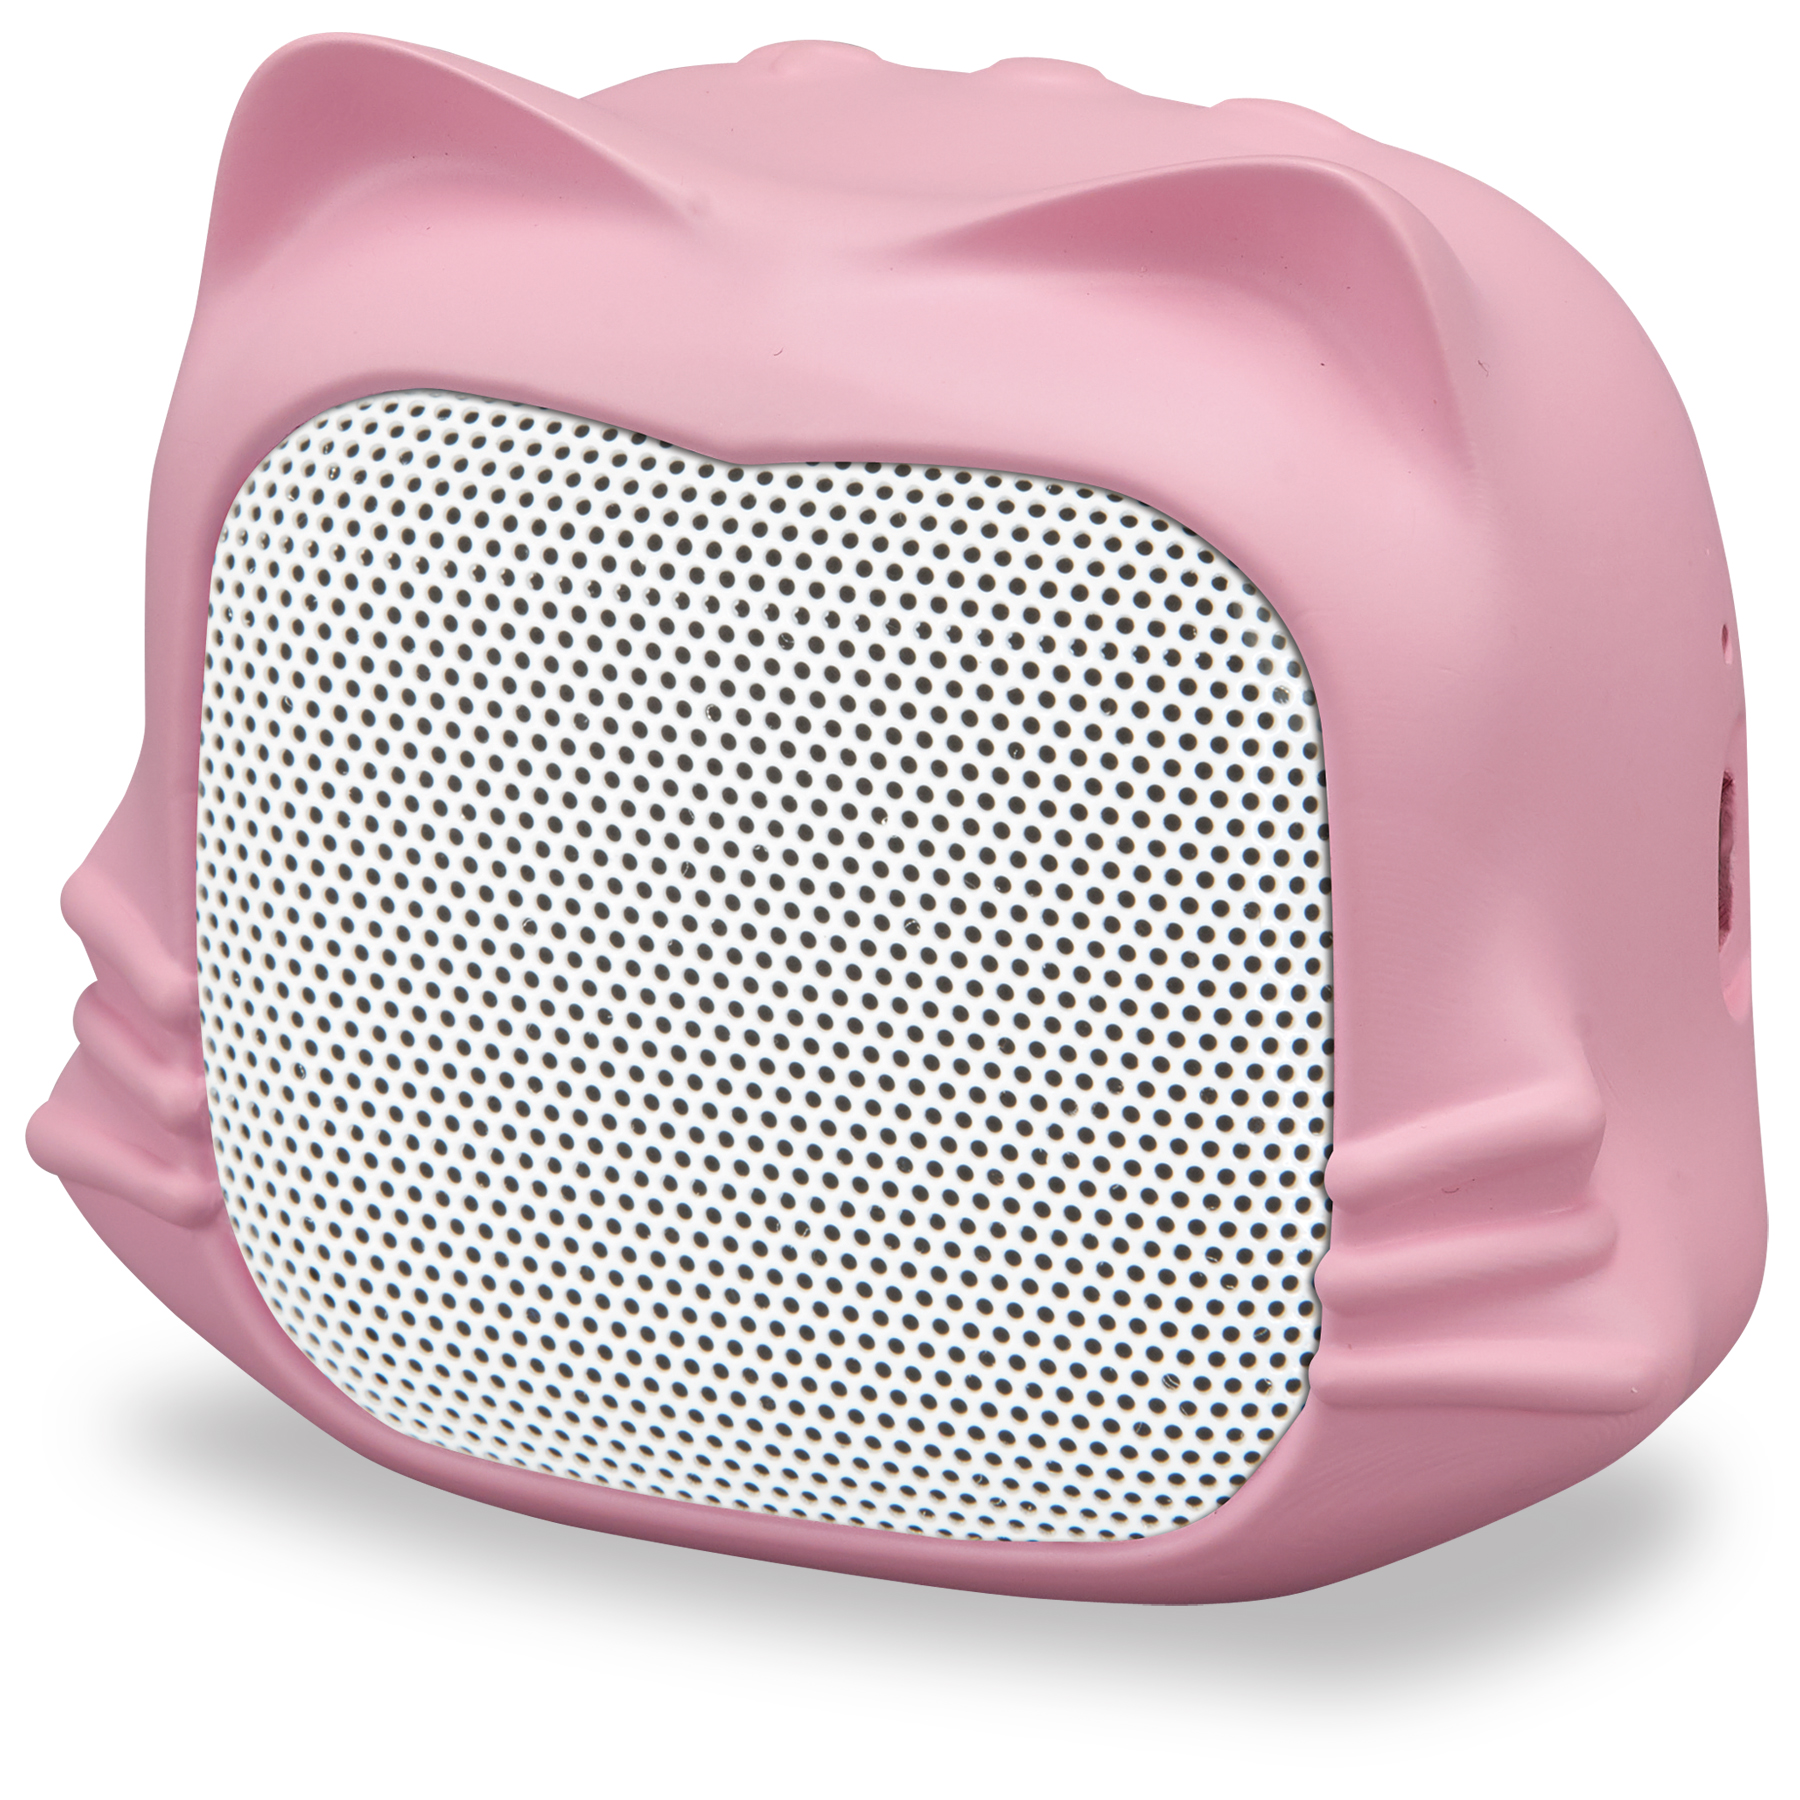 iLive Wild Tailz Wireless Cat Speaker, ISB19CAT - image 1 of 4